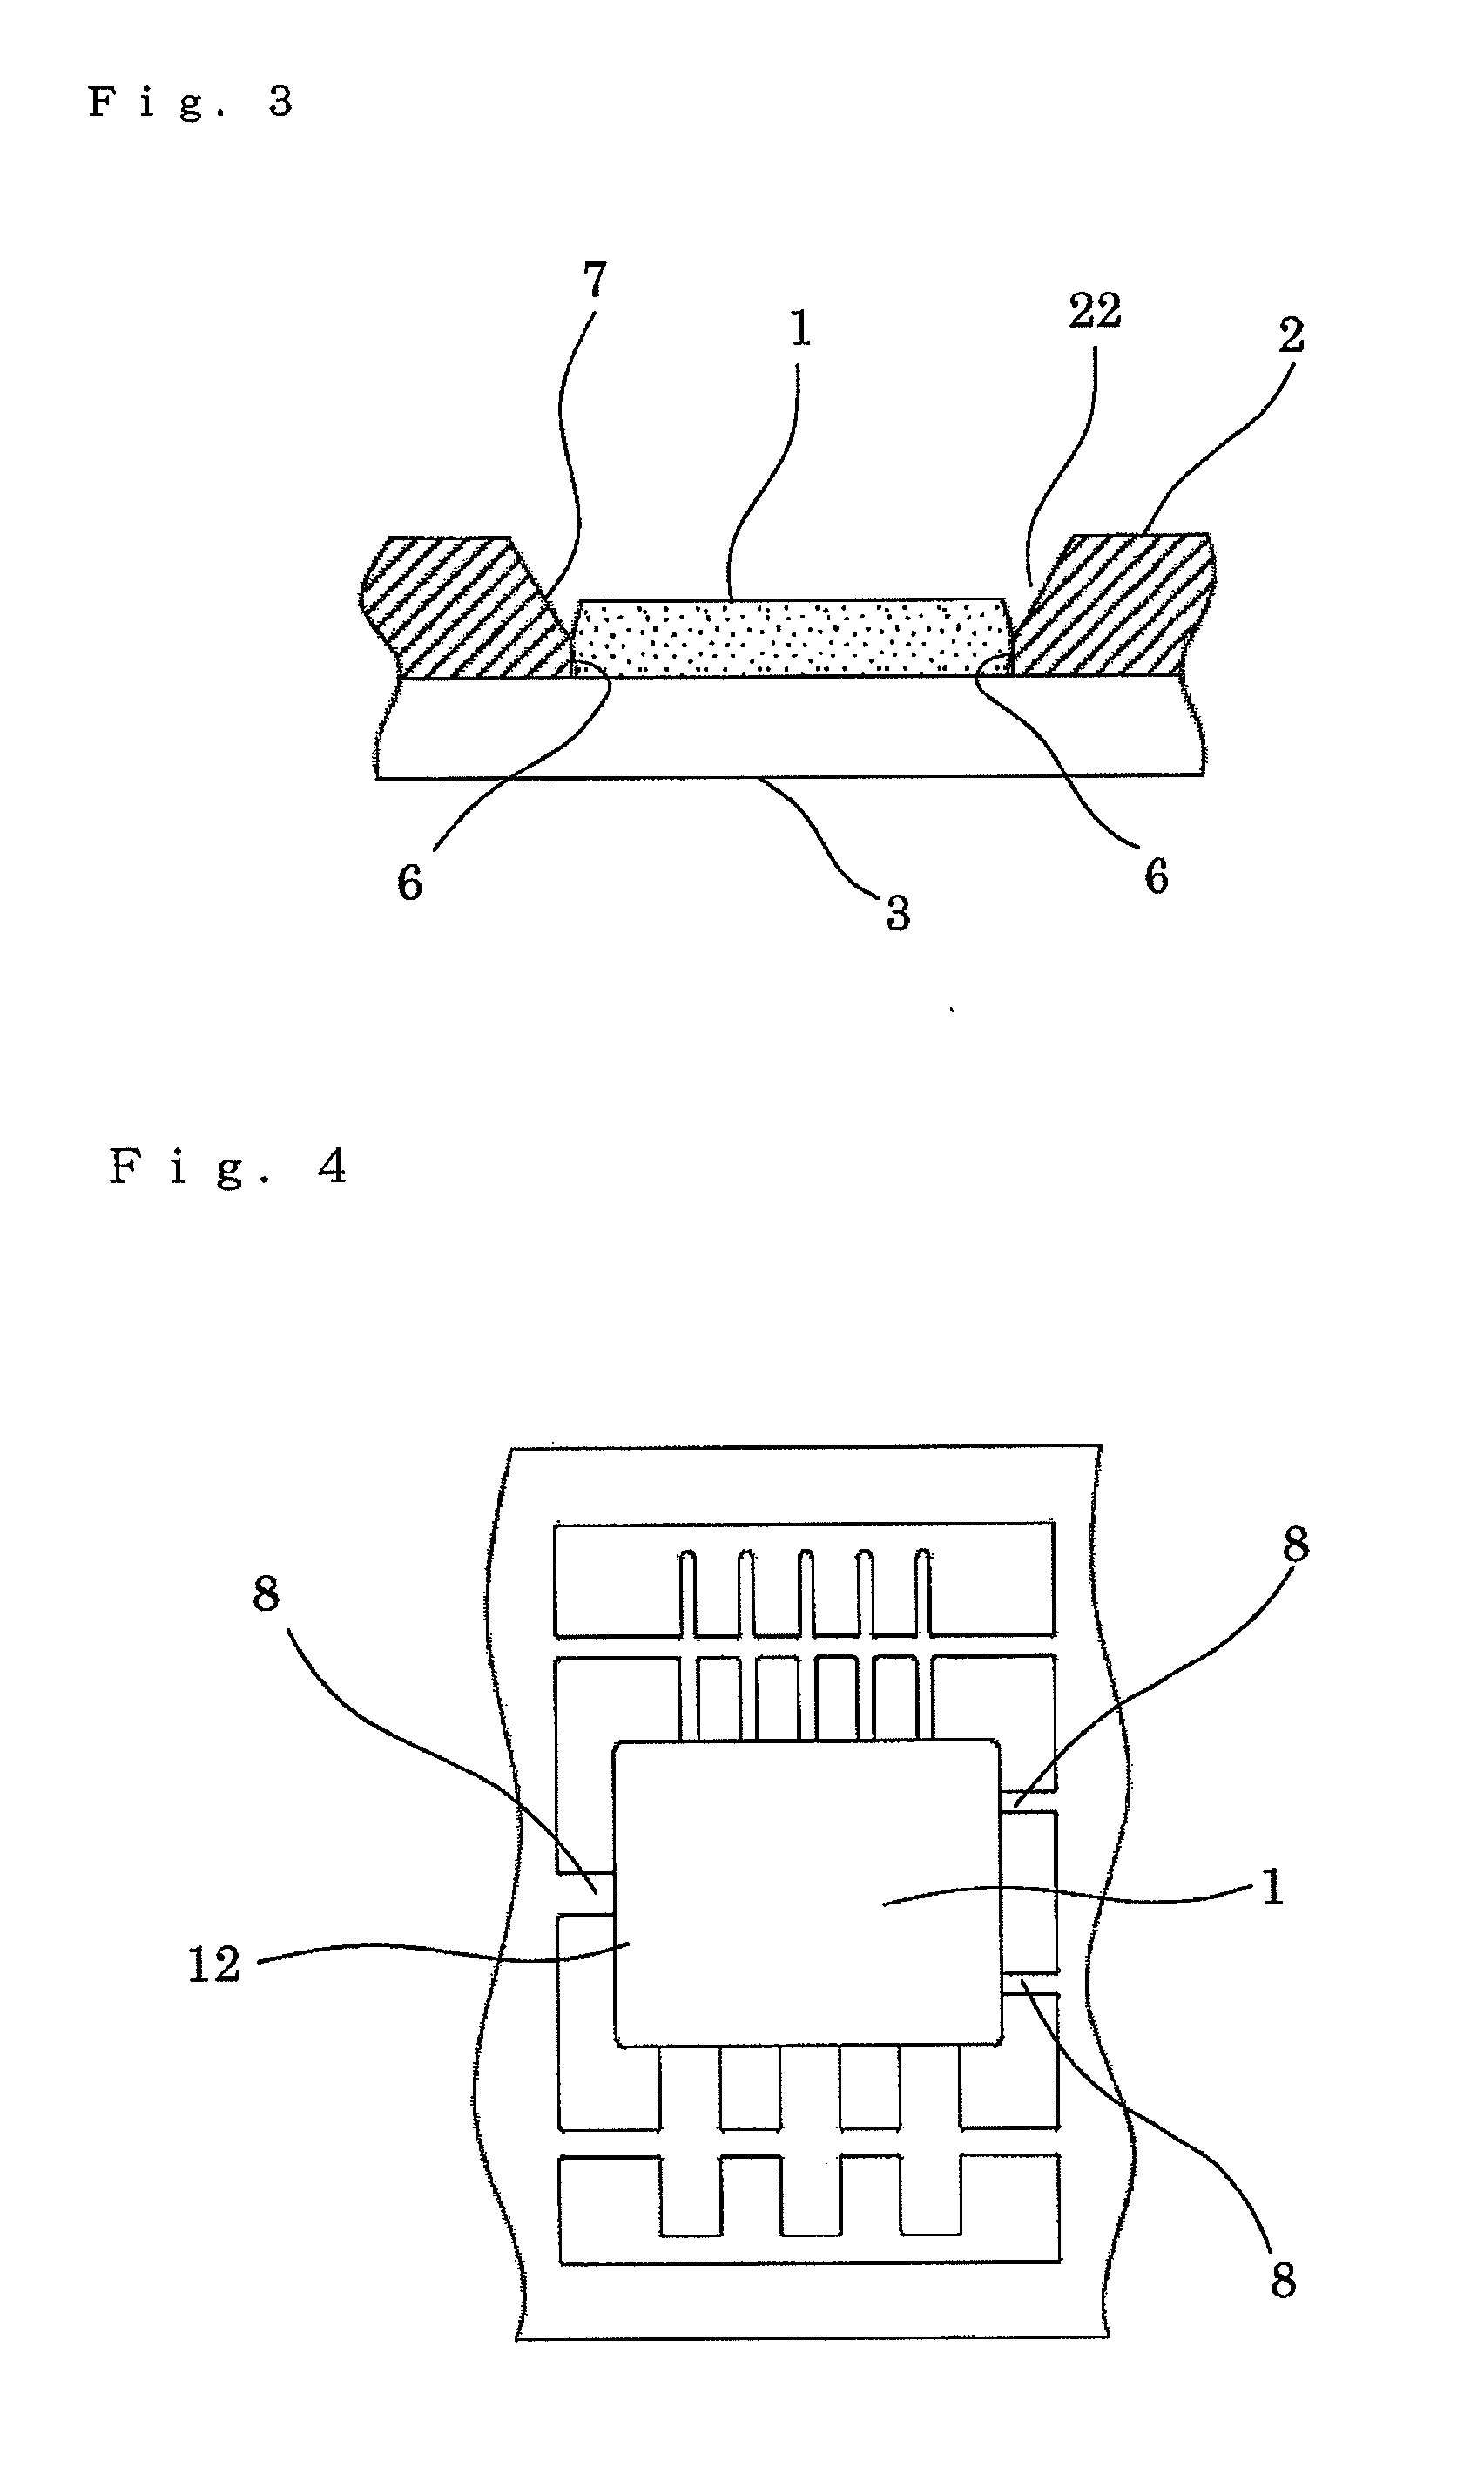 Semiconductor apparatus